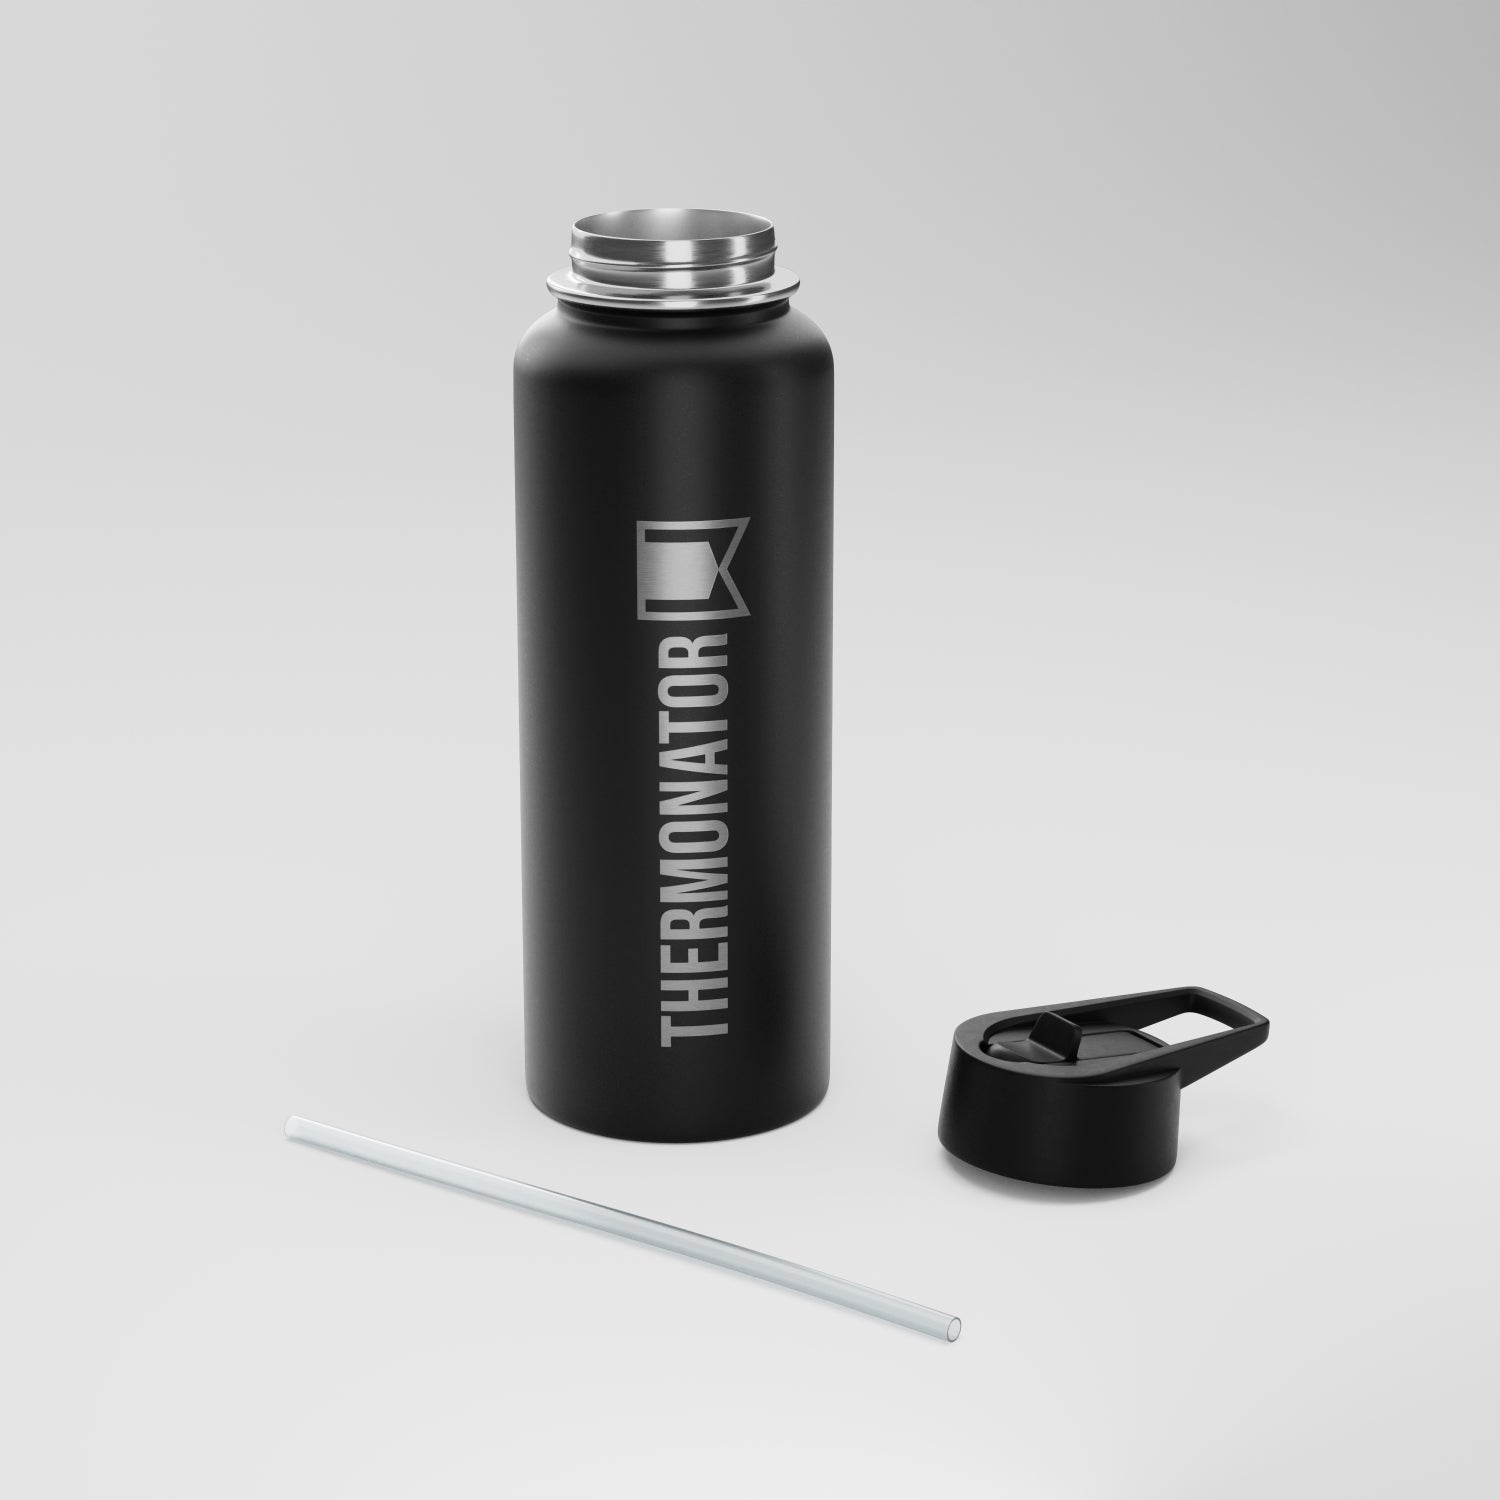 ACTIVE HYDRATION BUNDLE | 2x Thermo Bottle + GRATIS Thermonator + GRATIS E-BOOK | BPA FREI